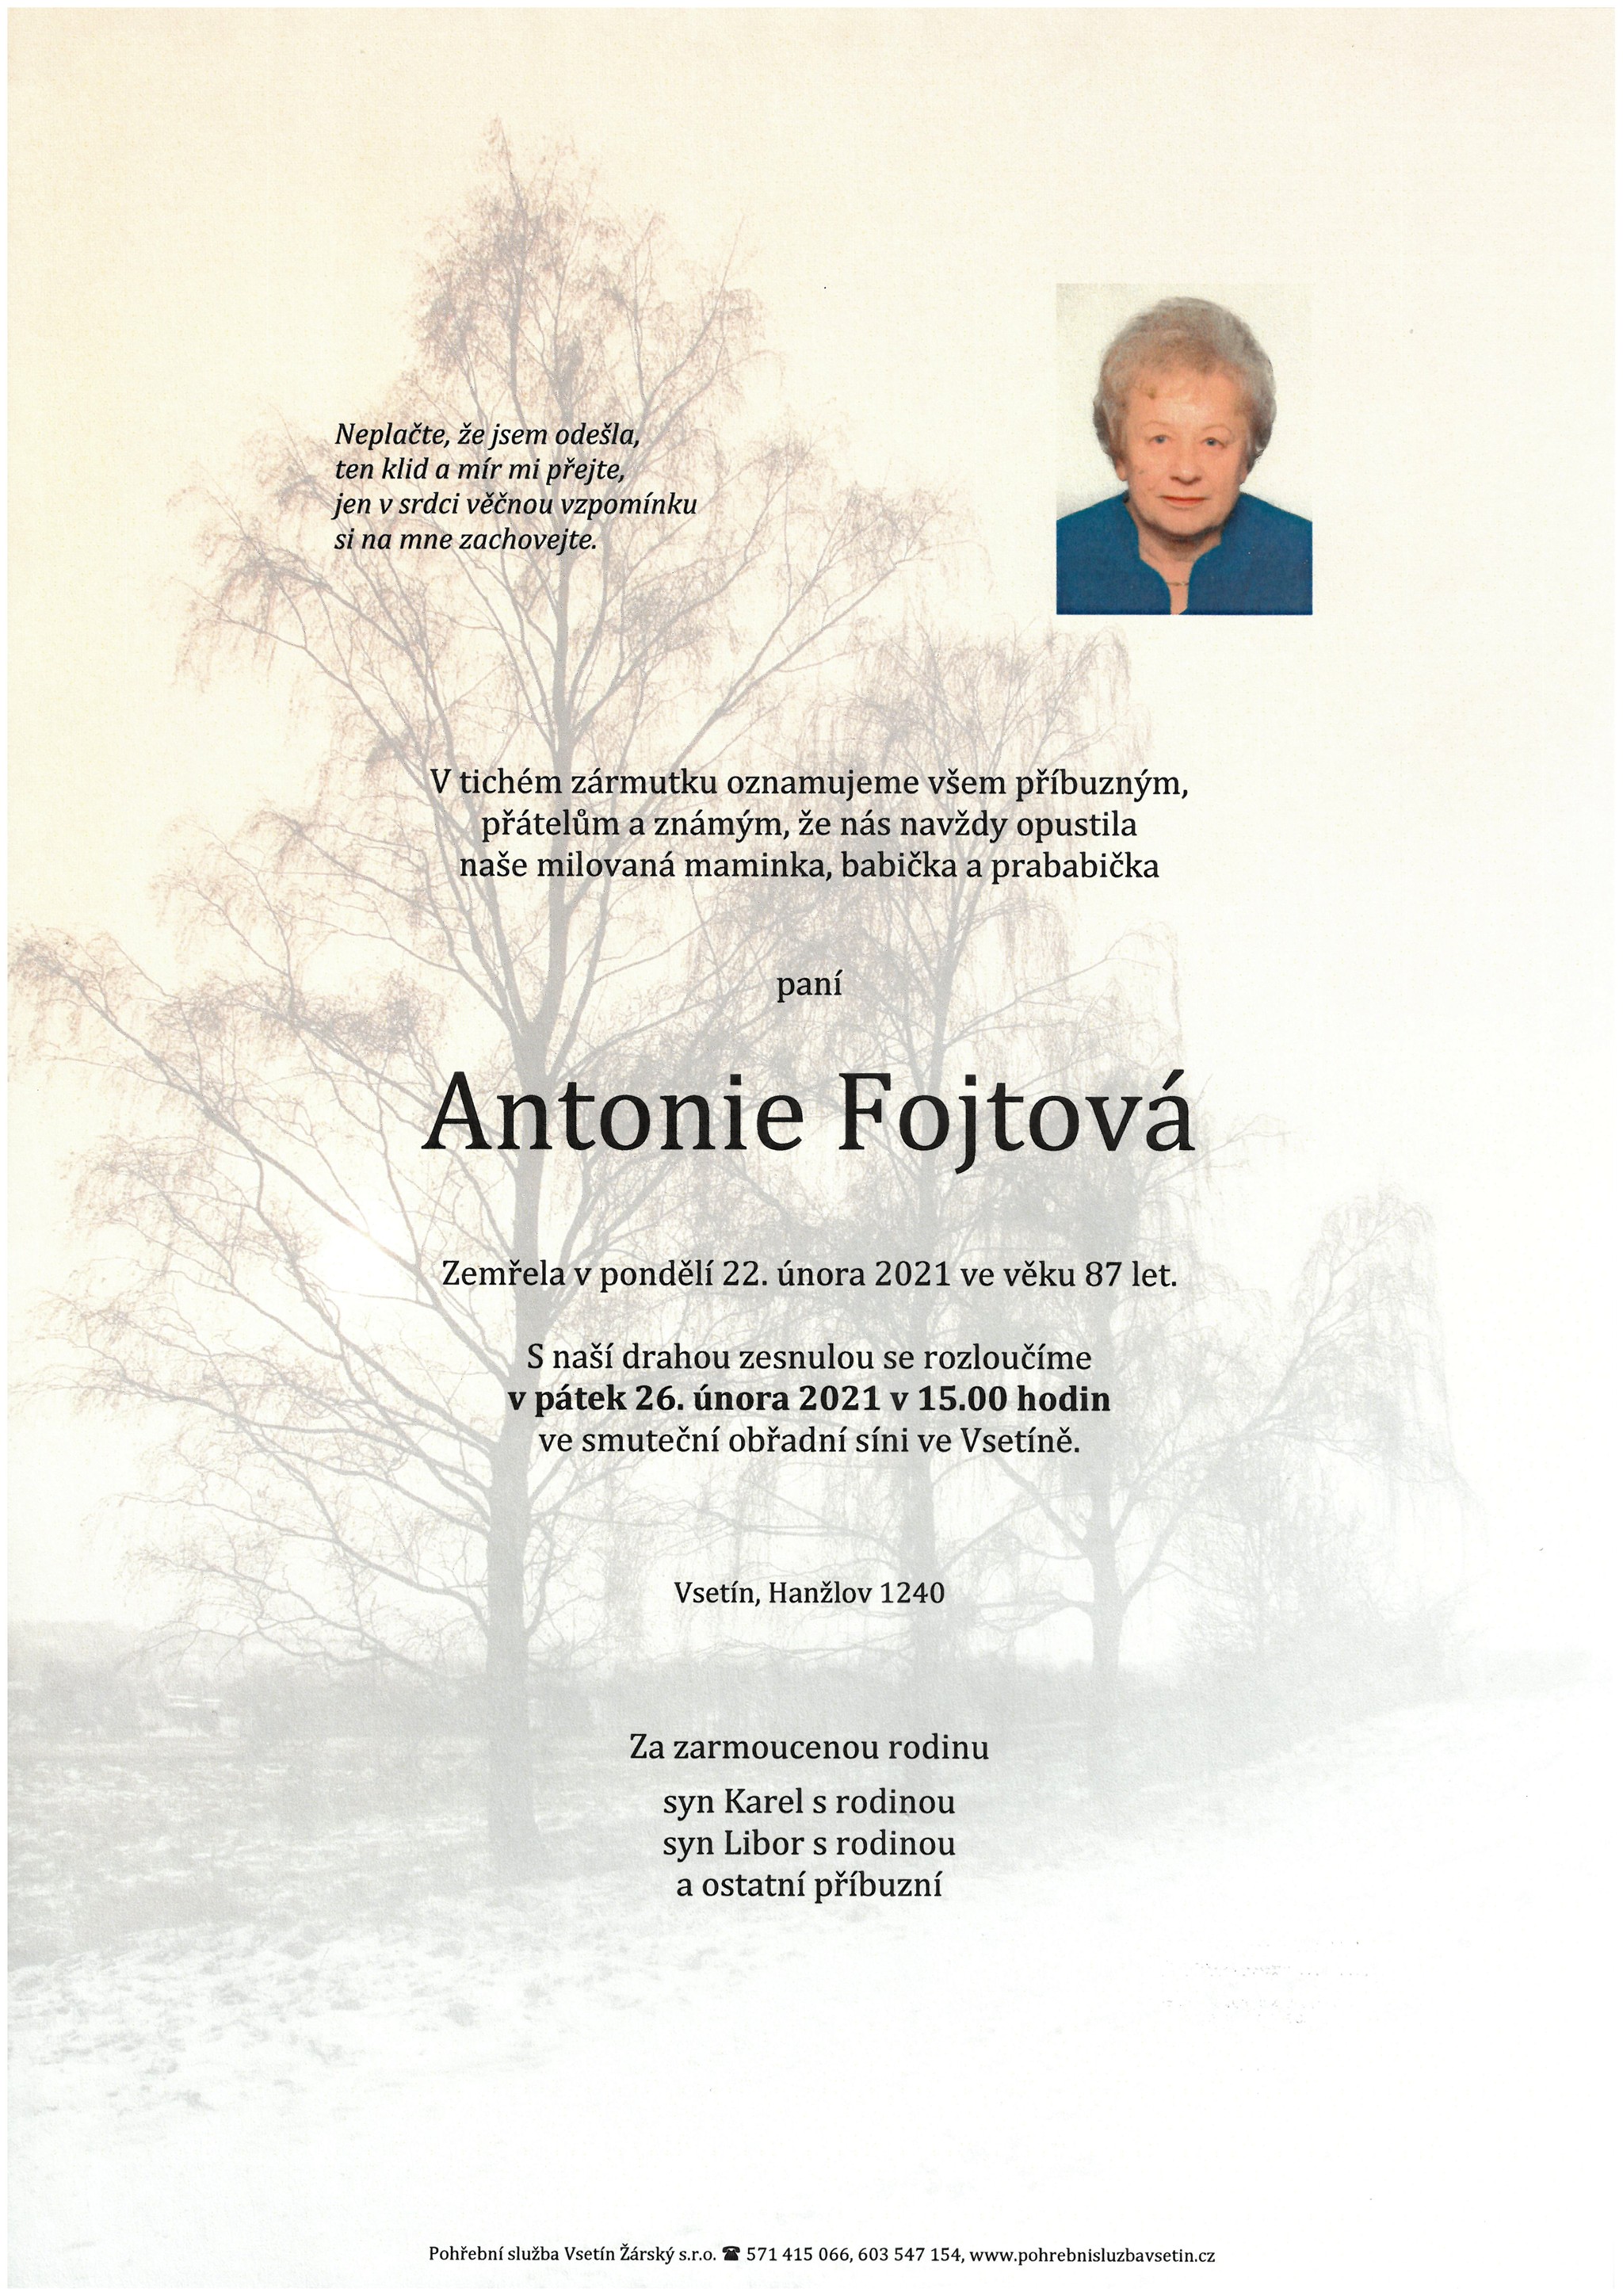 Antonie Fojtová